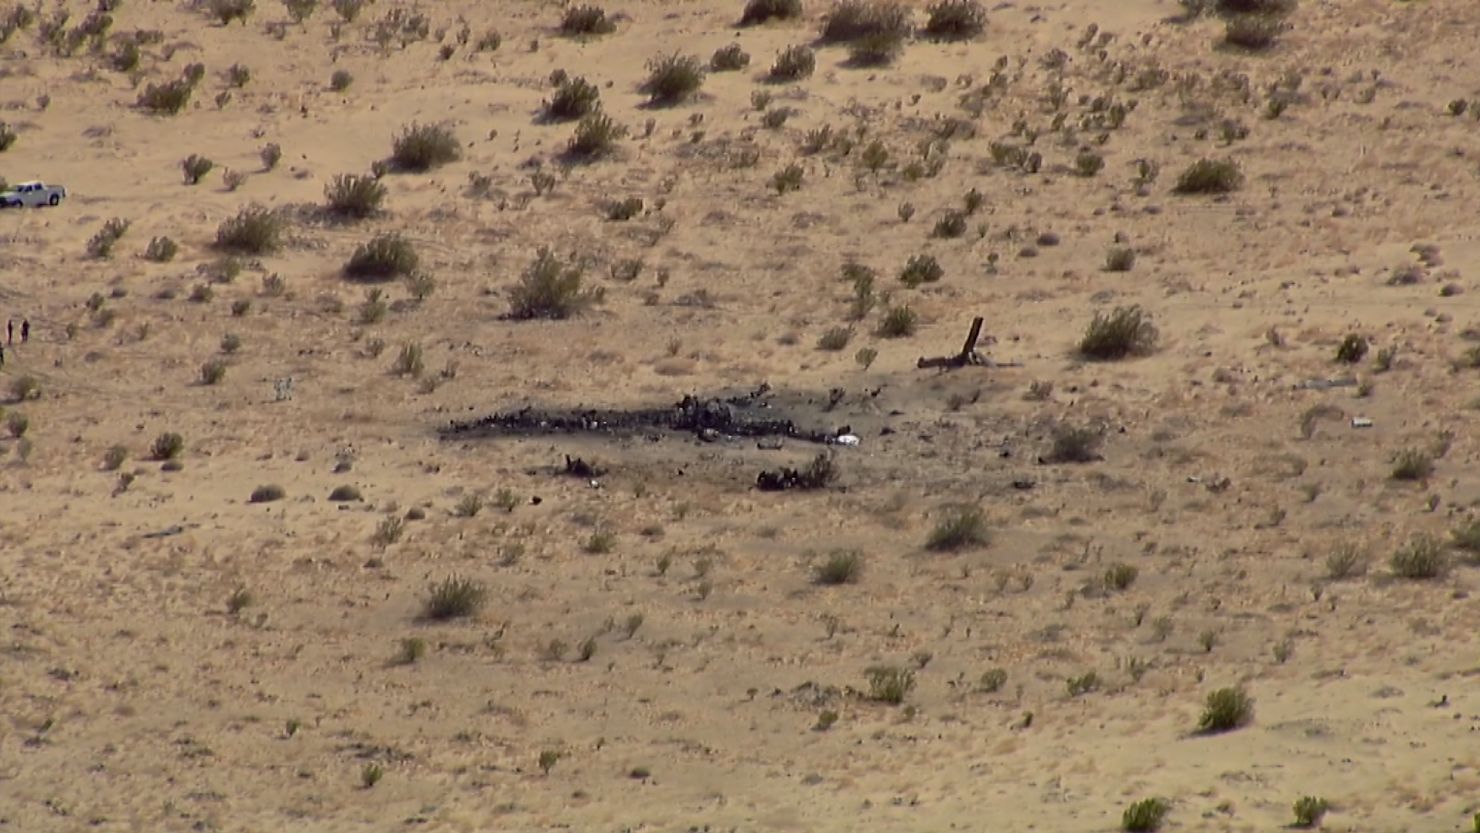 Personnel arrive near the scene where a US Marine MV-22B Osprey crashed near Glamis, California, on June 8.